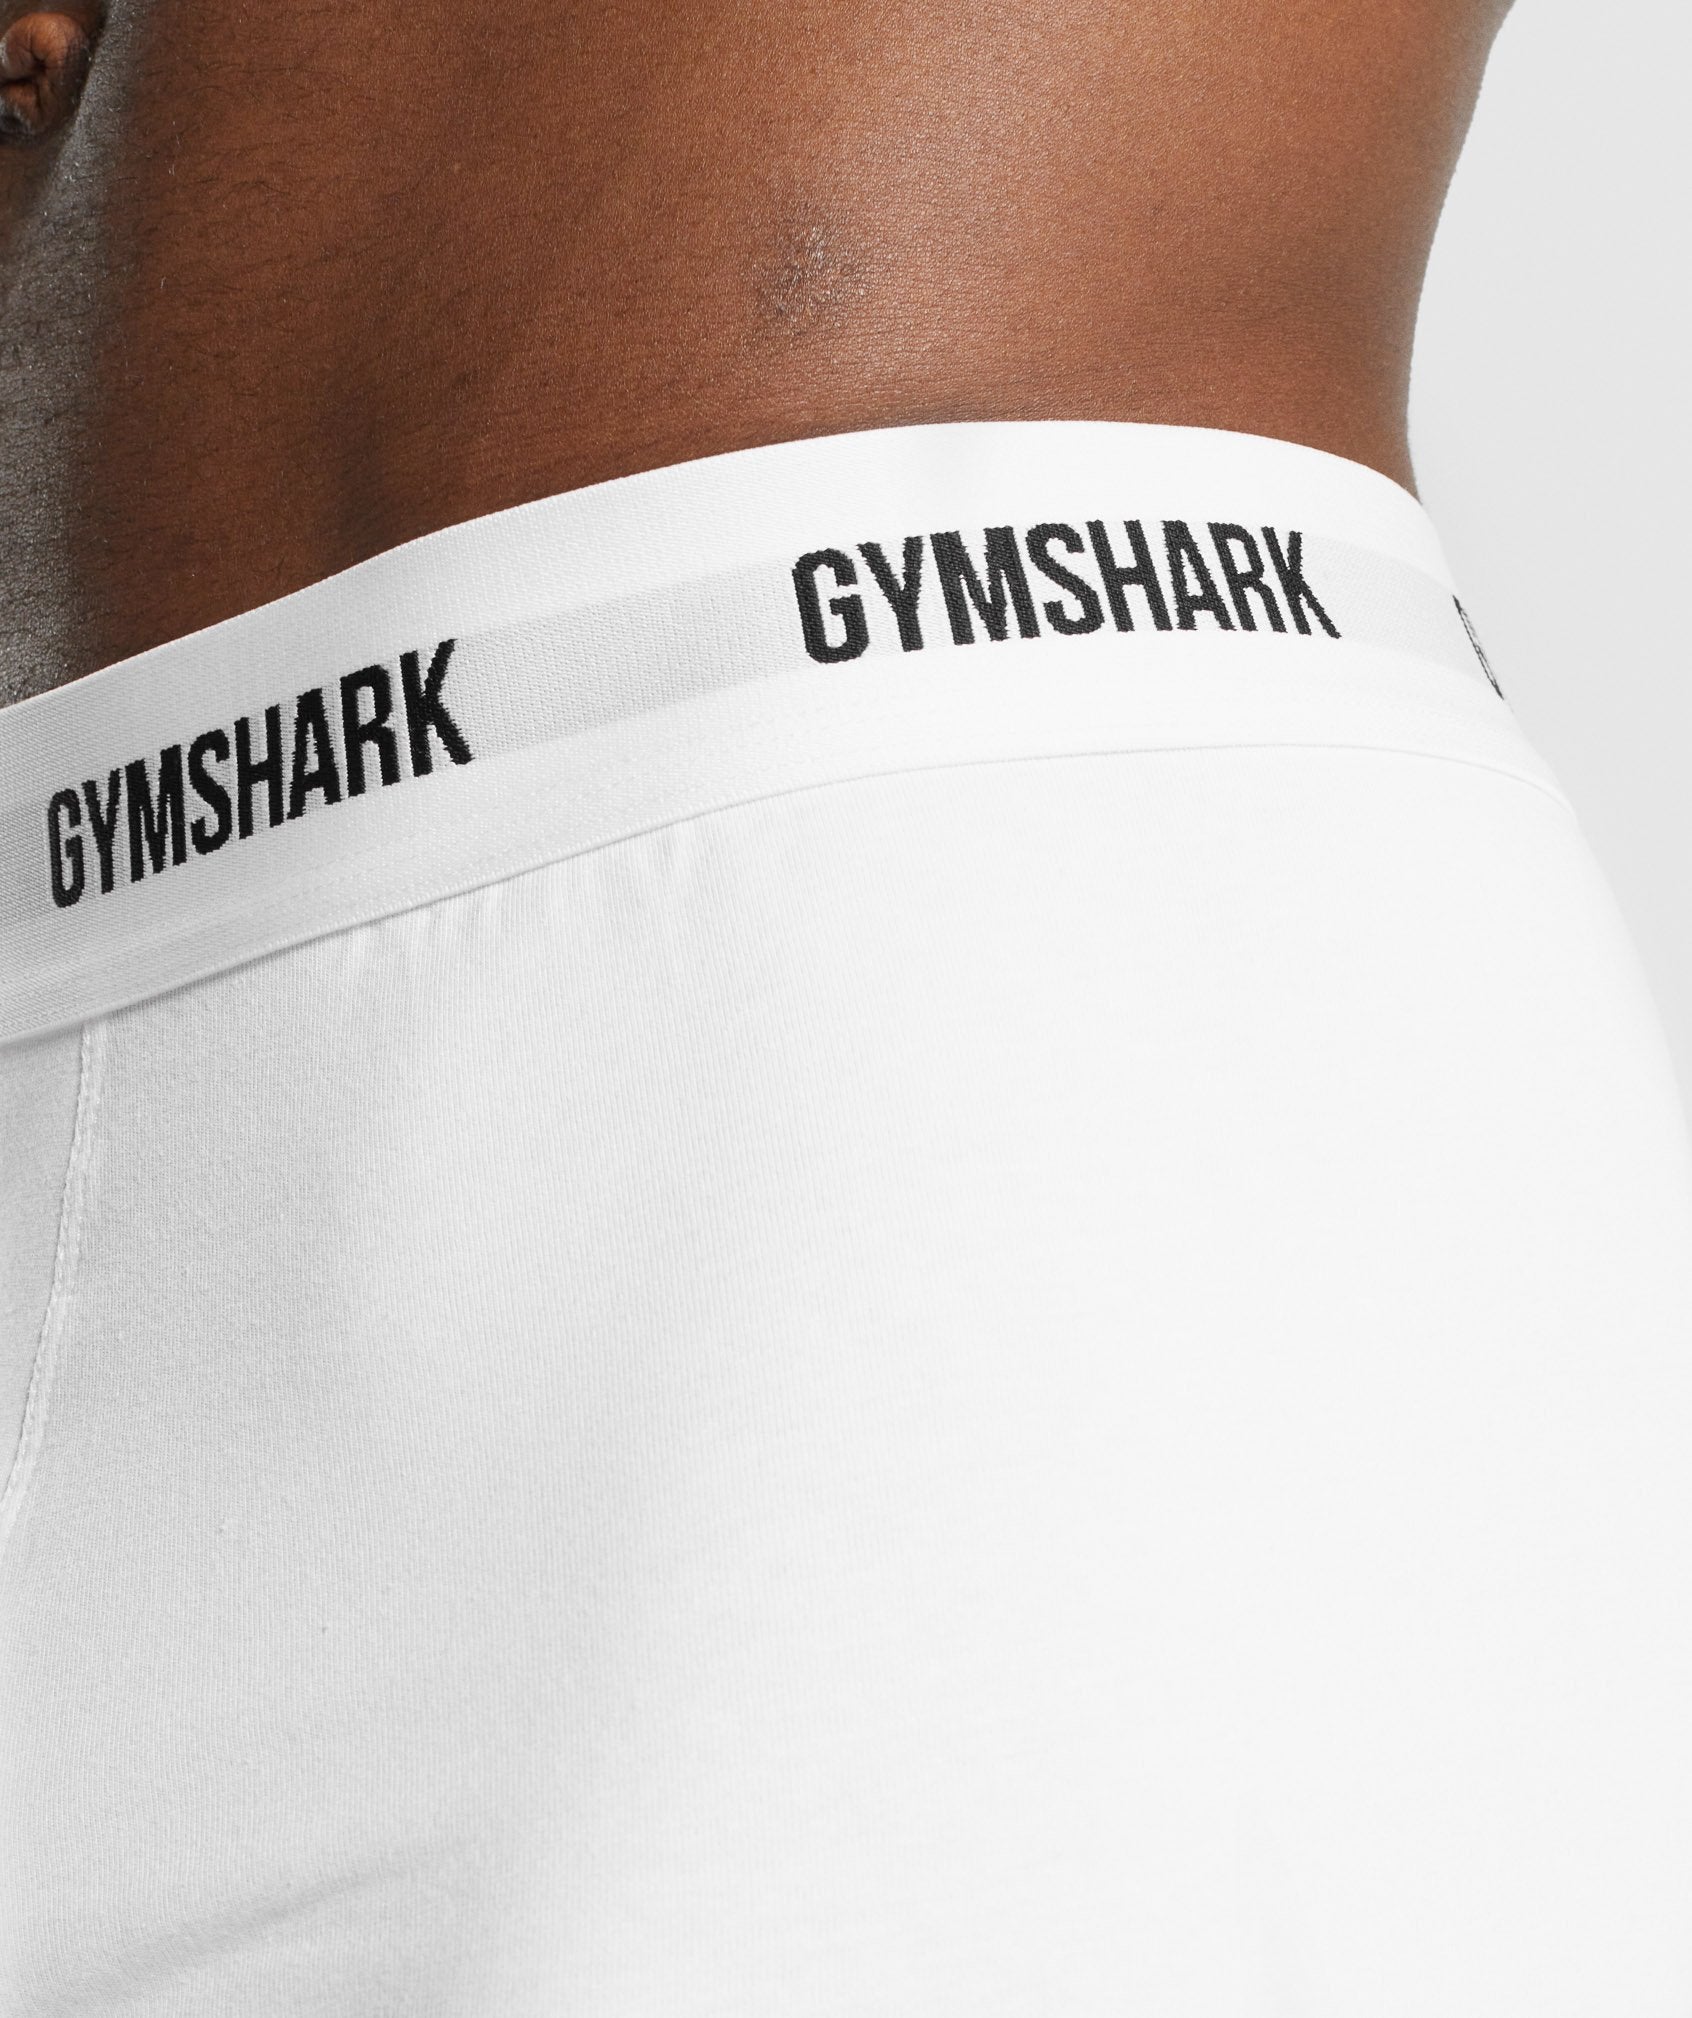 Gymshark underwear sales after this post📈📈📈 *felt like